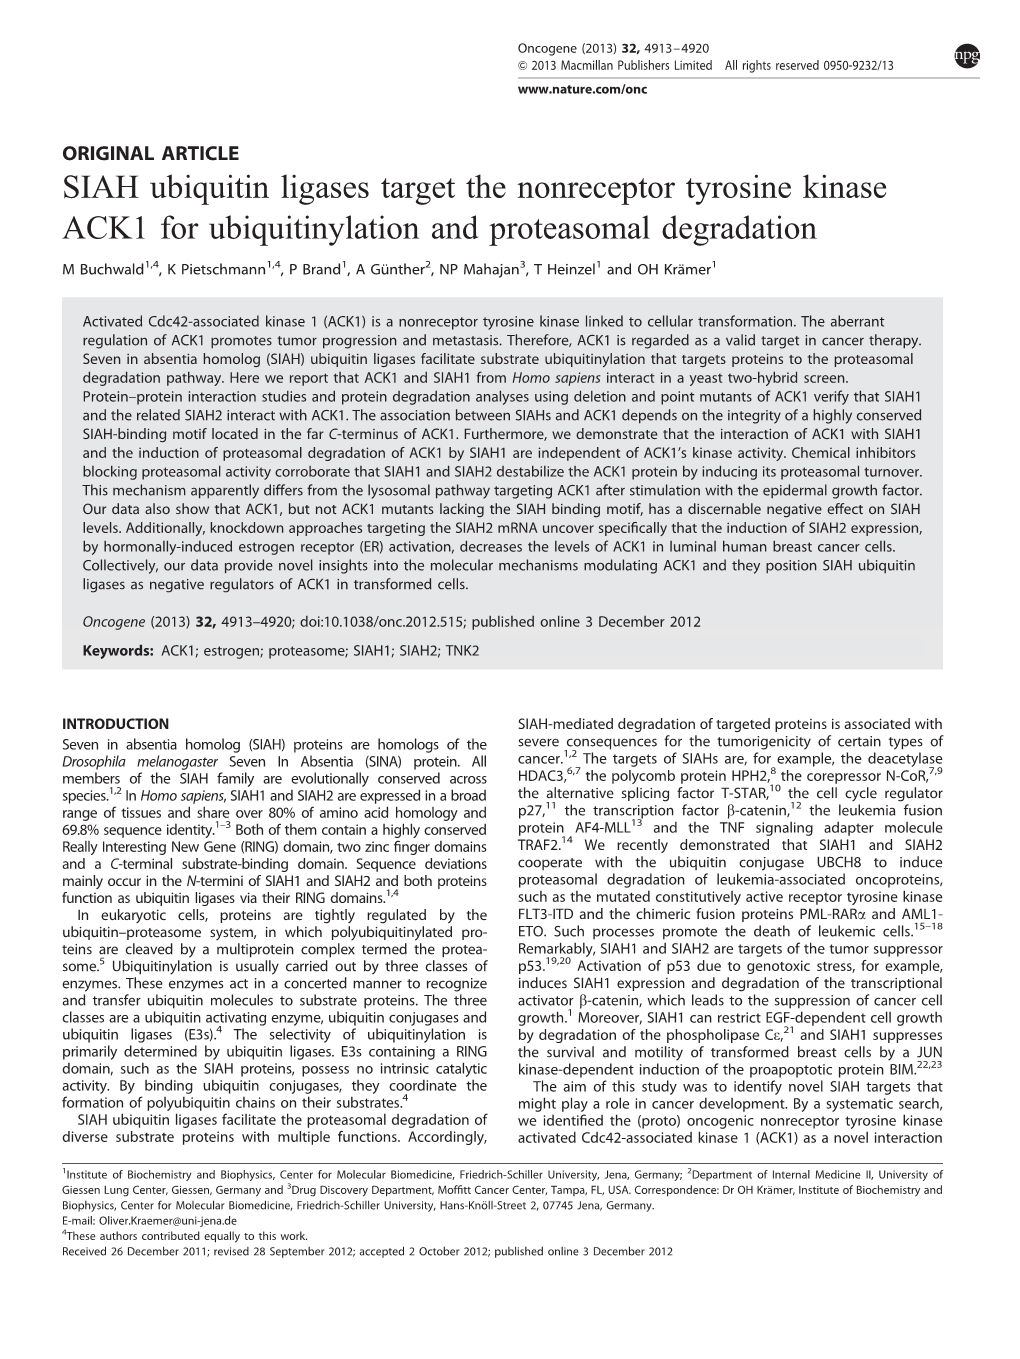 SIAH Ubiquitin Ligases Target the Nonreceptor Tyrosine Kinase ACK1 for Ubiquitinylation and Proteasomal Degradation